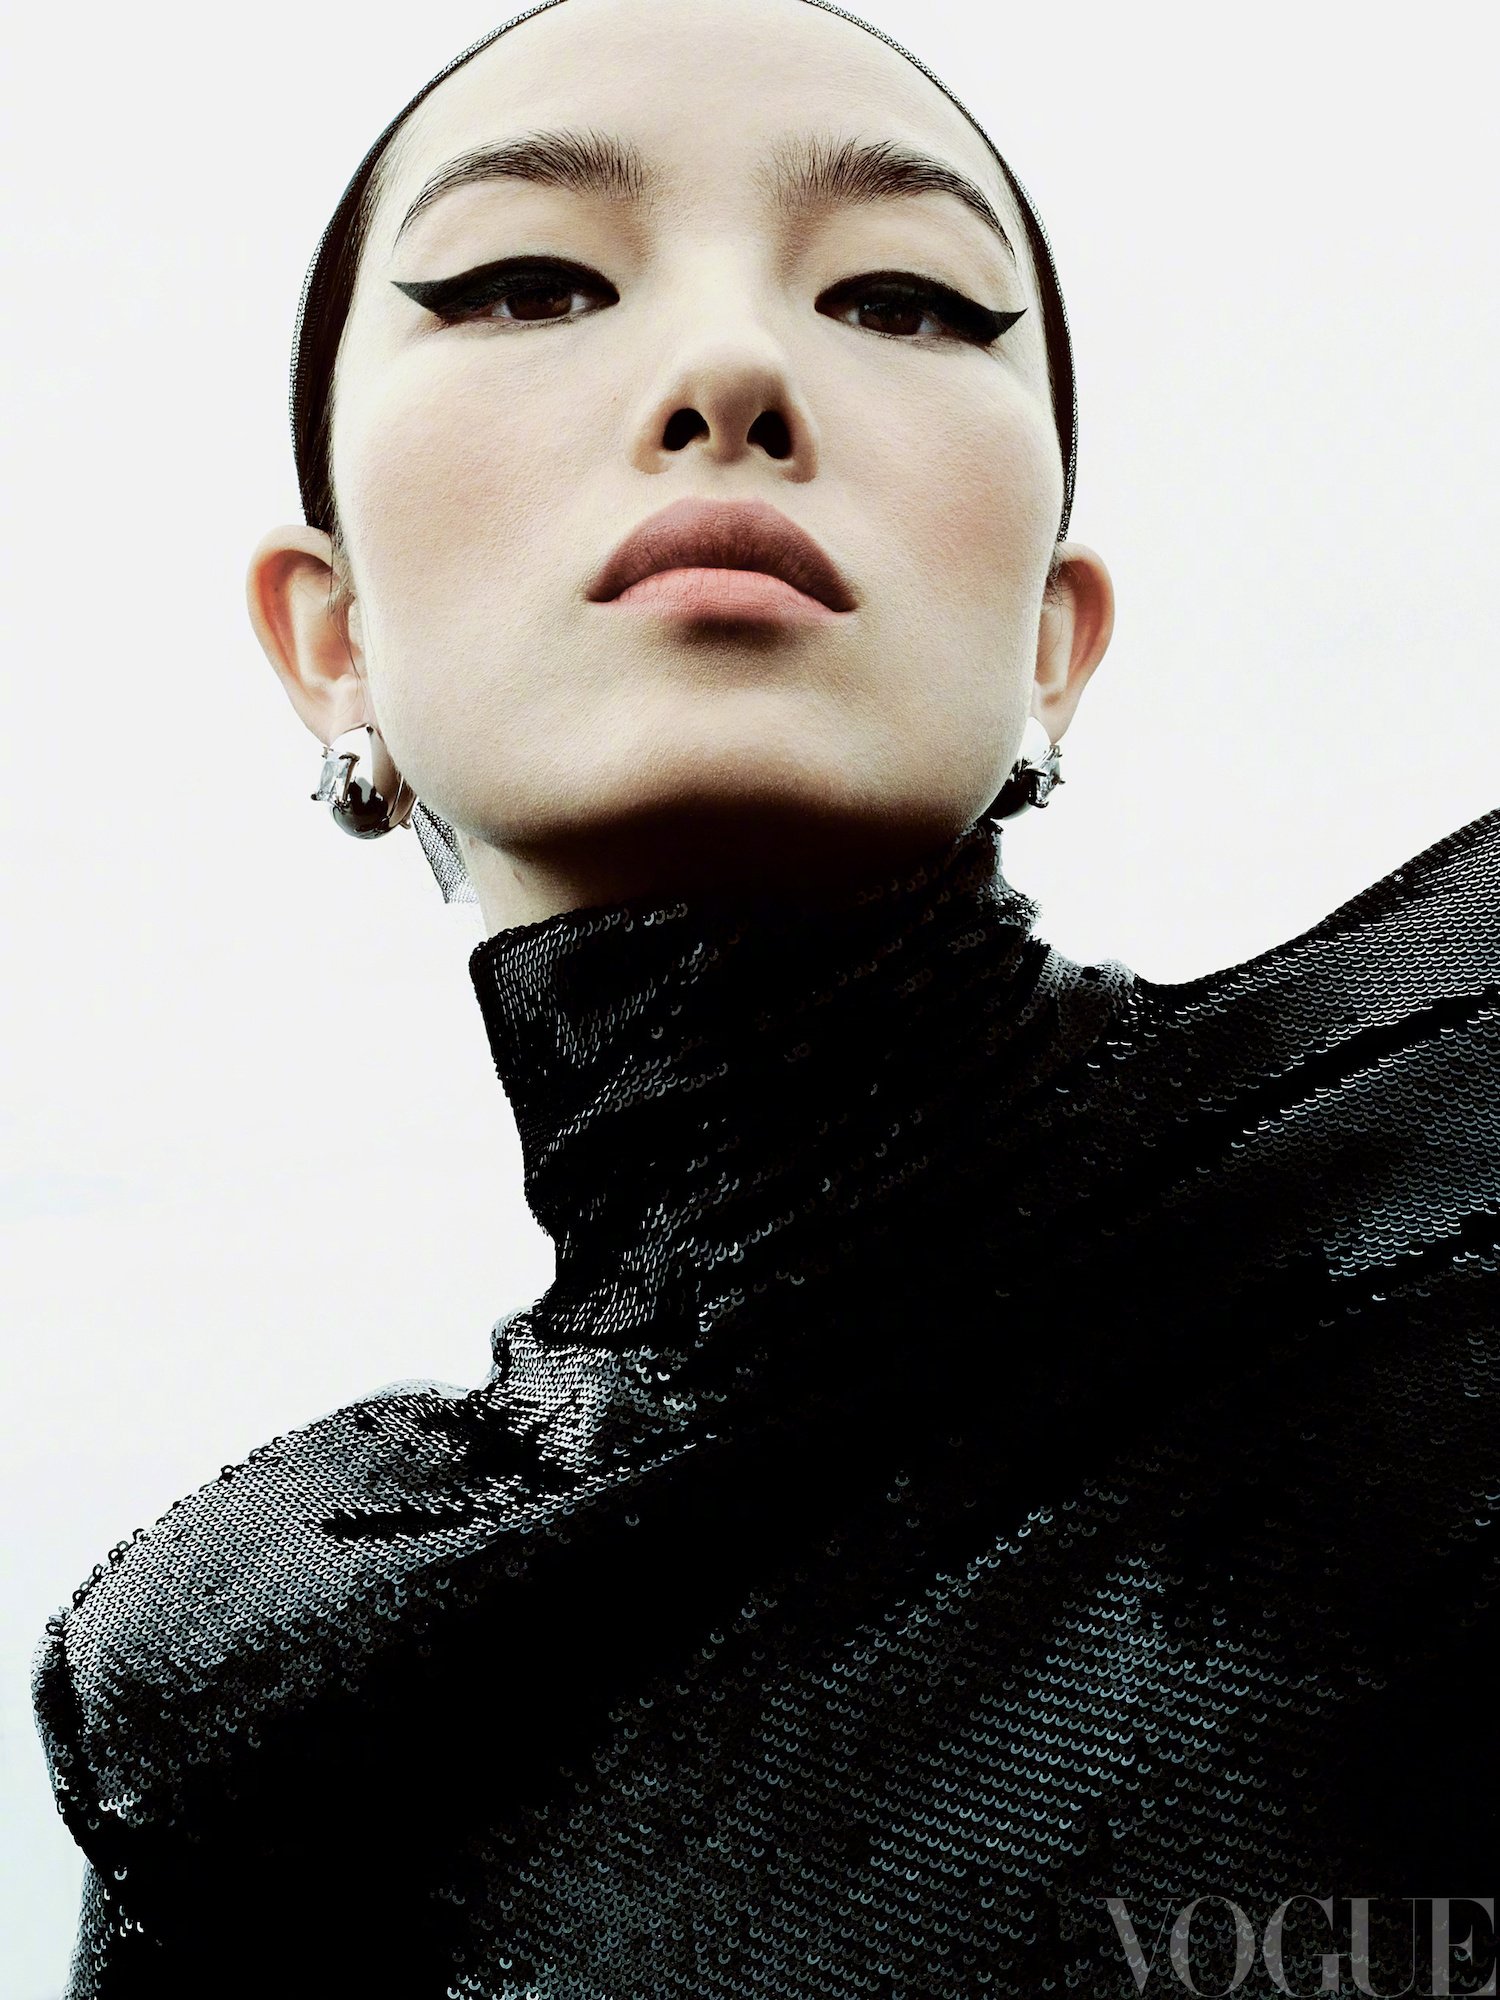 Gucci - Through Vogue China's editorial lens, presenting a